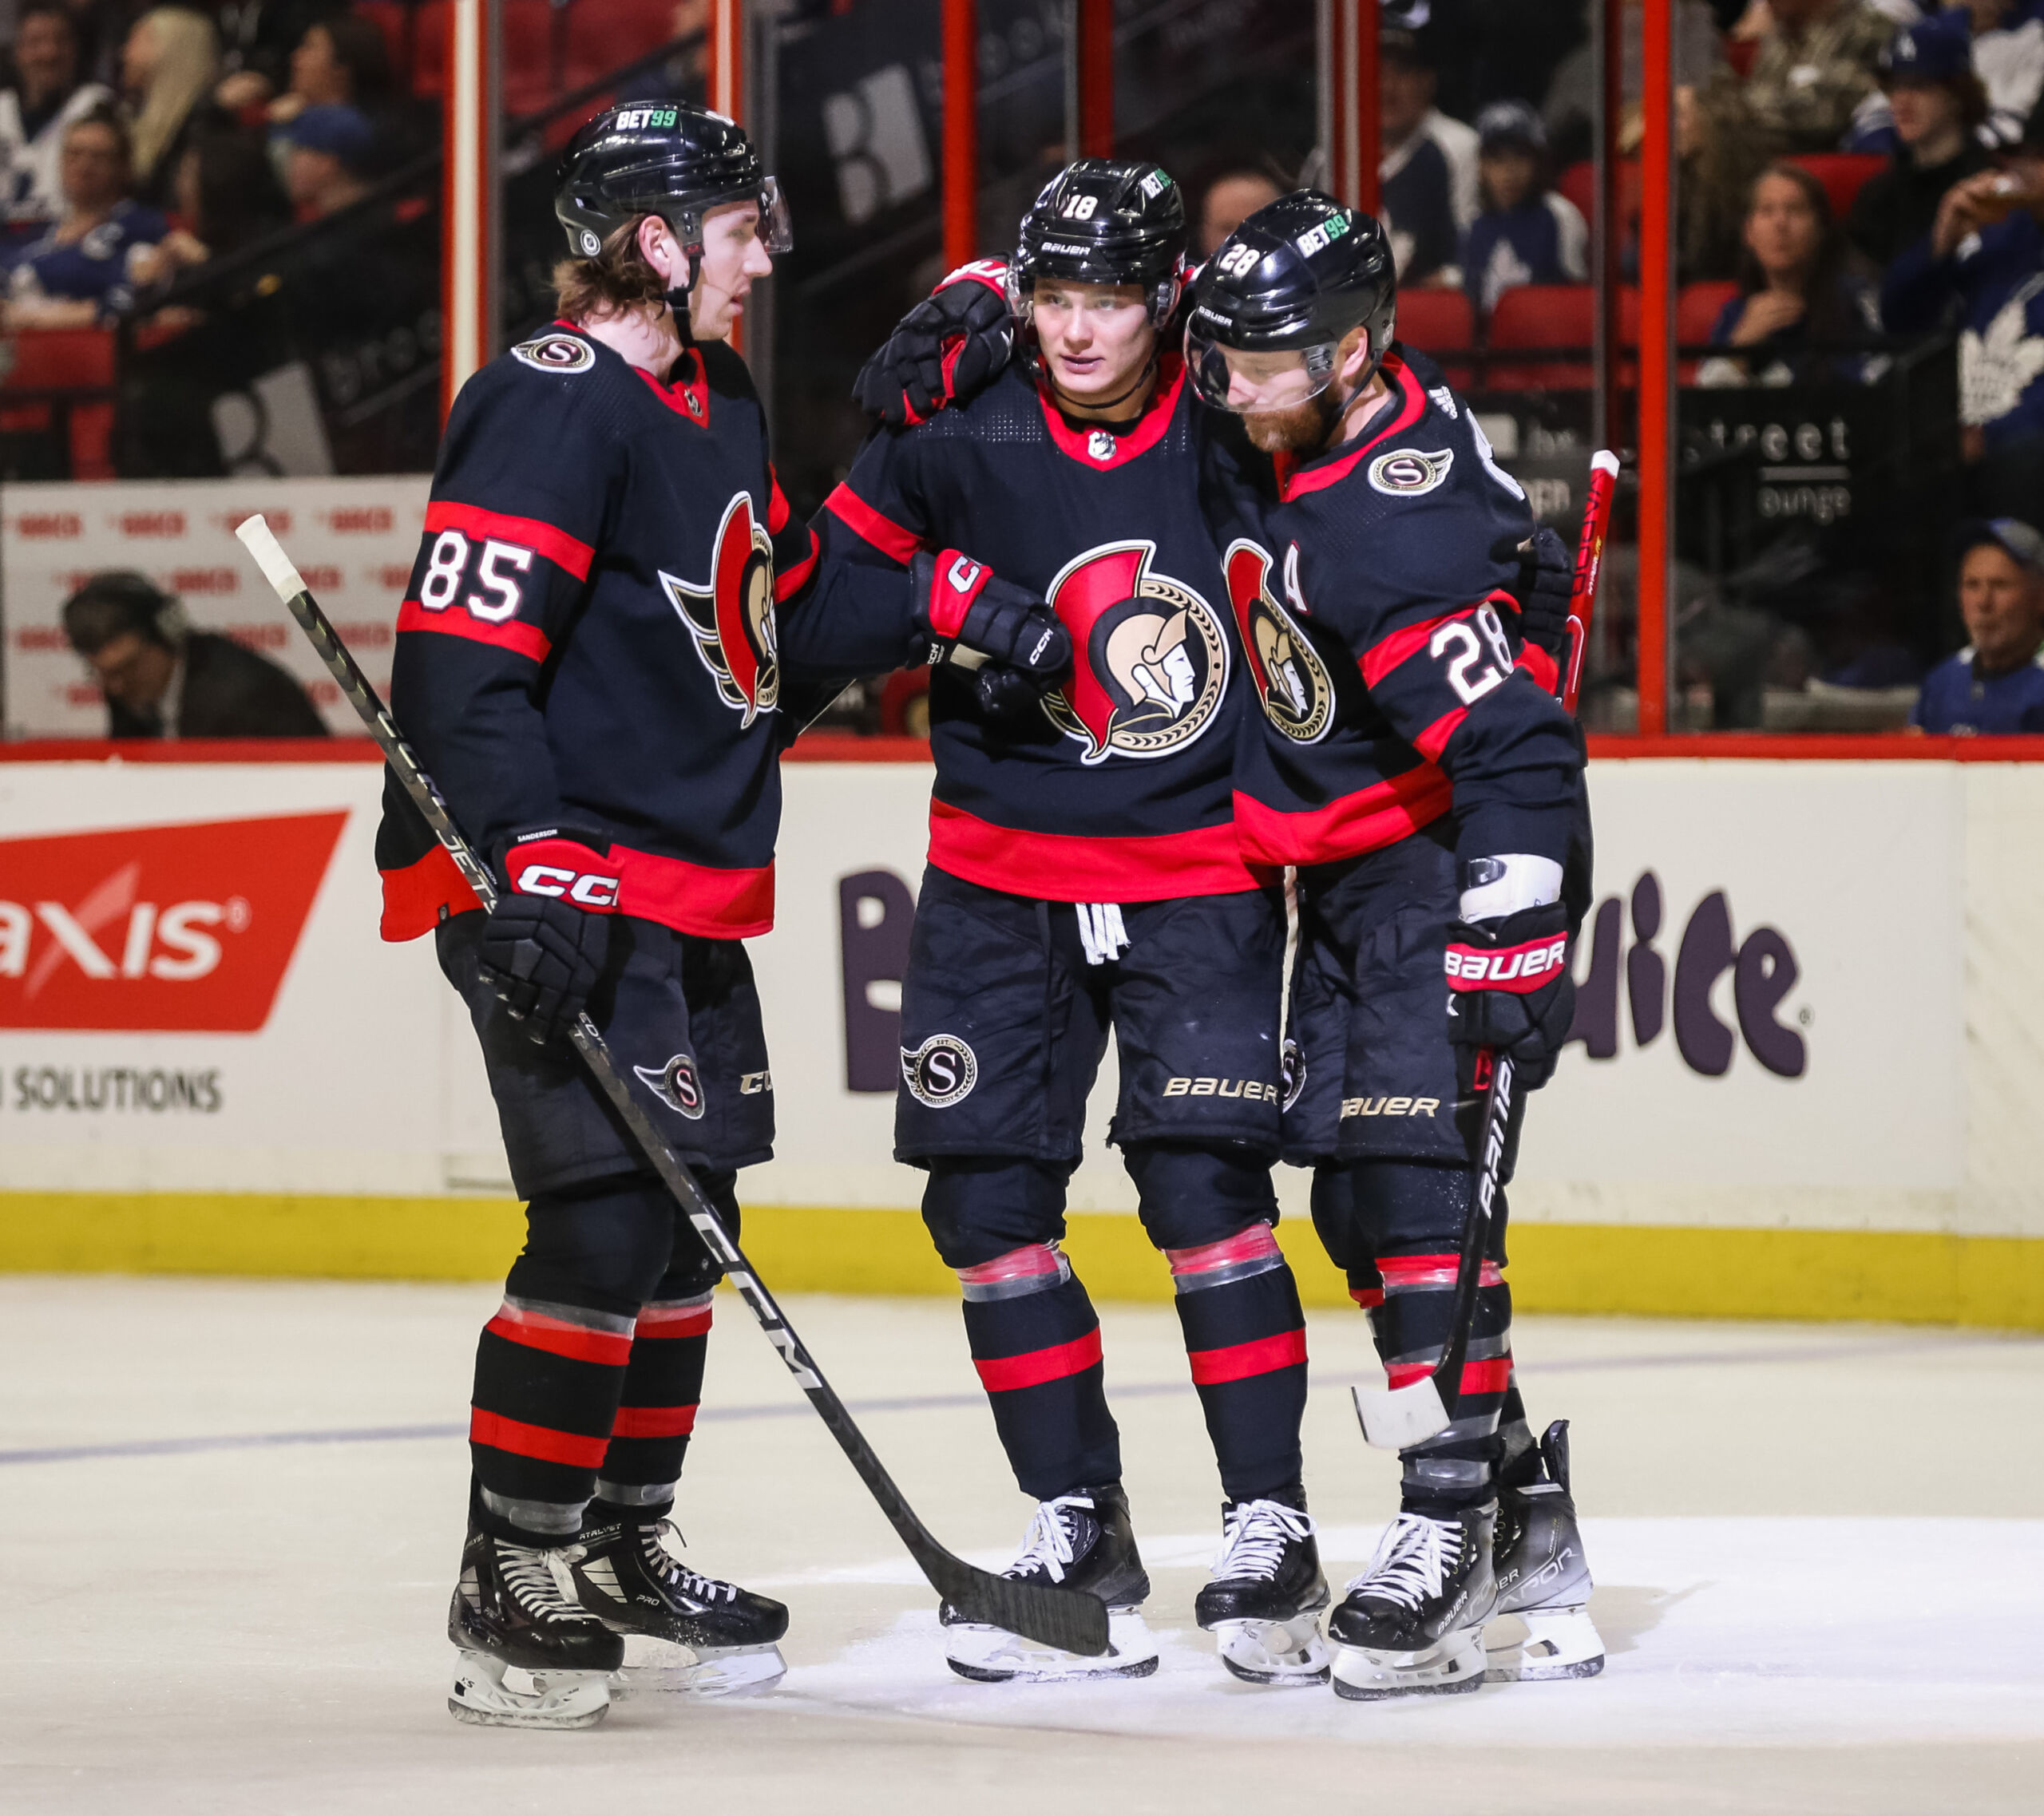 Ottawa Senators acquire high-scoring winger DeBrincat from Chicago for  picks